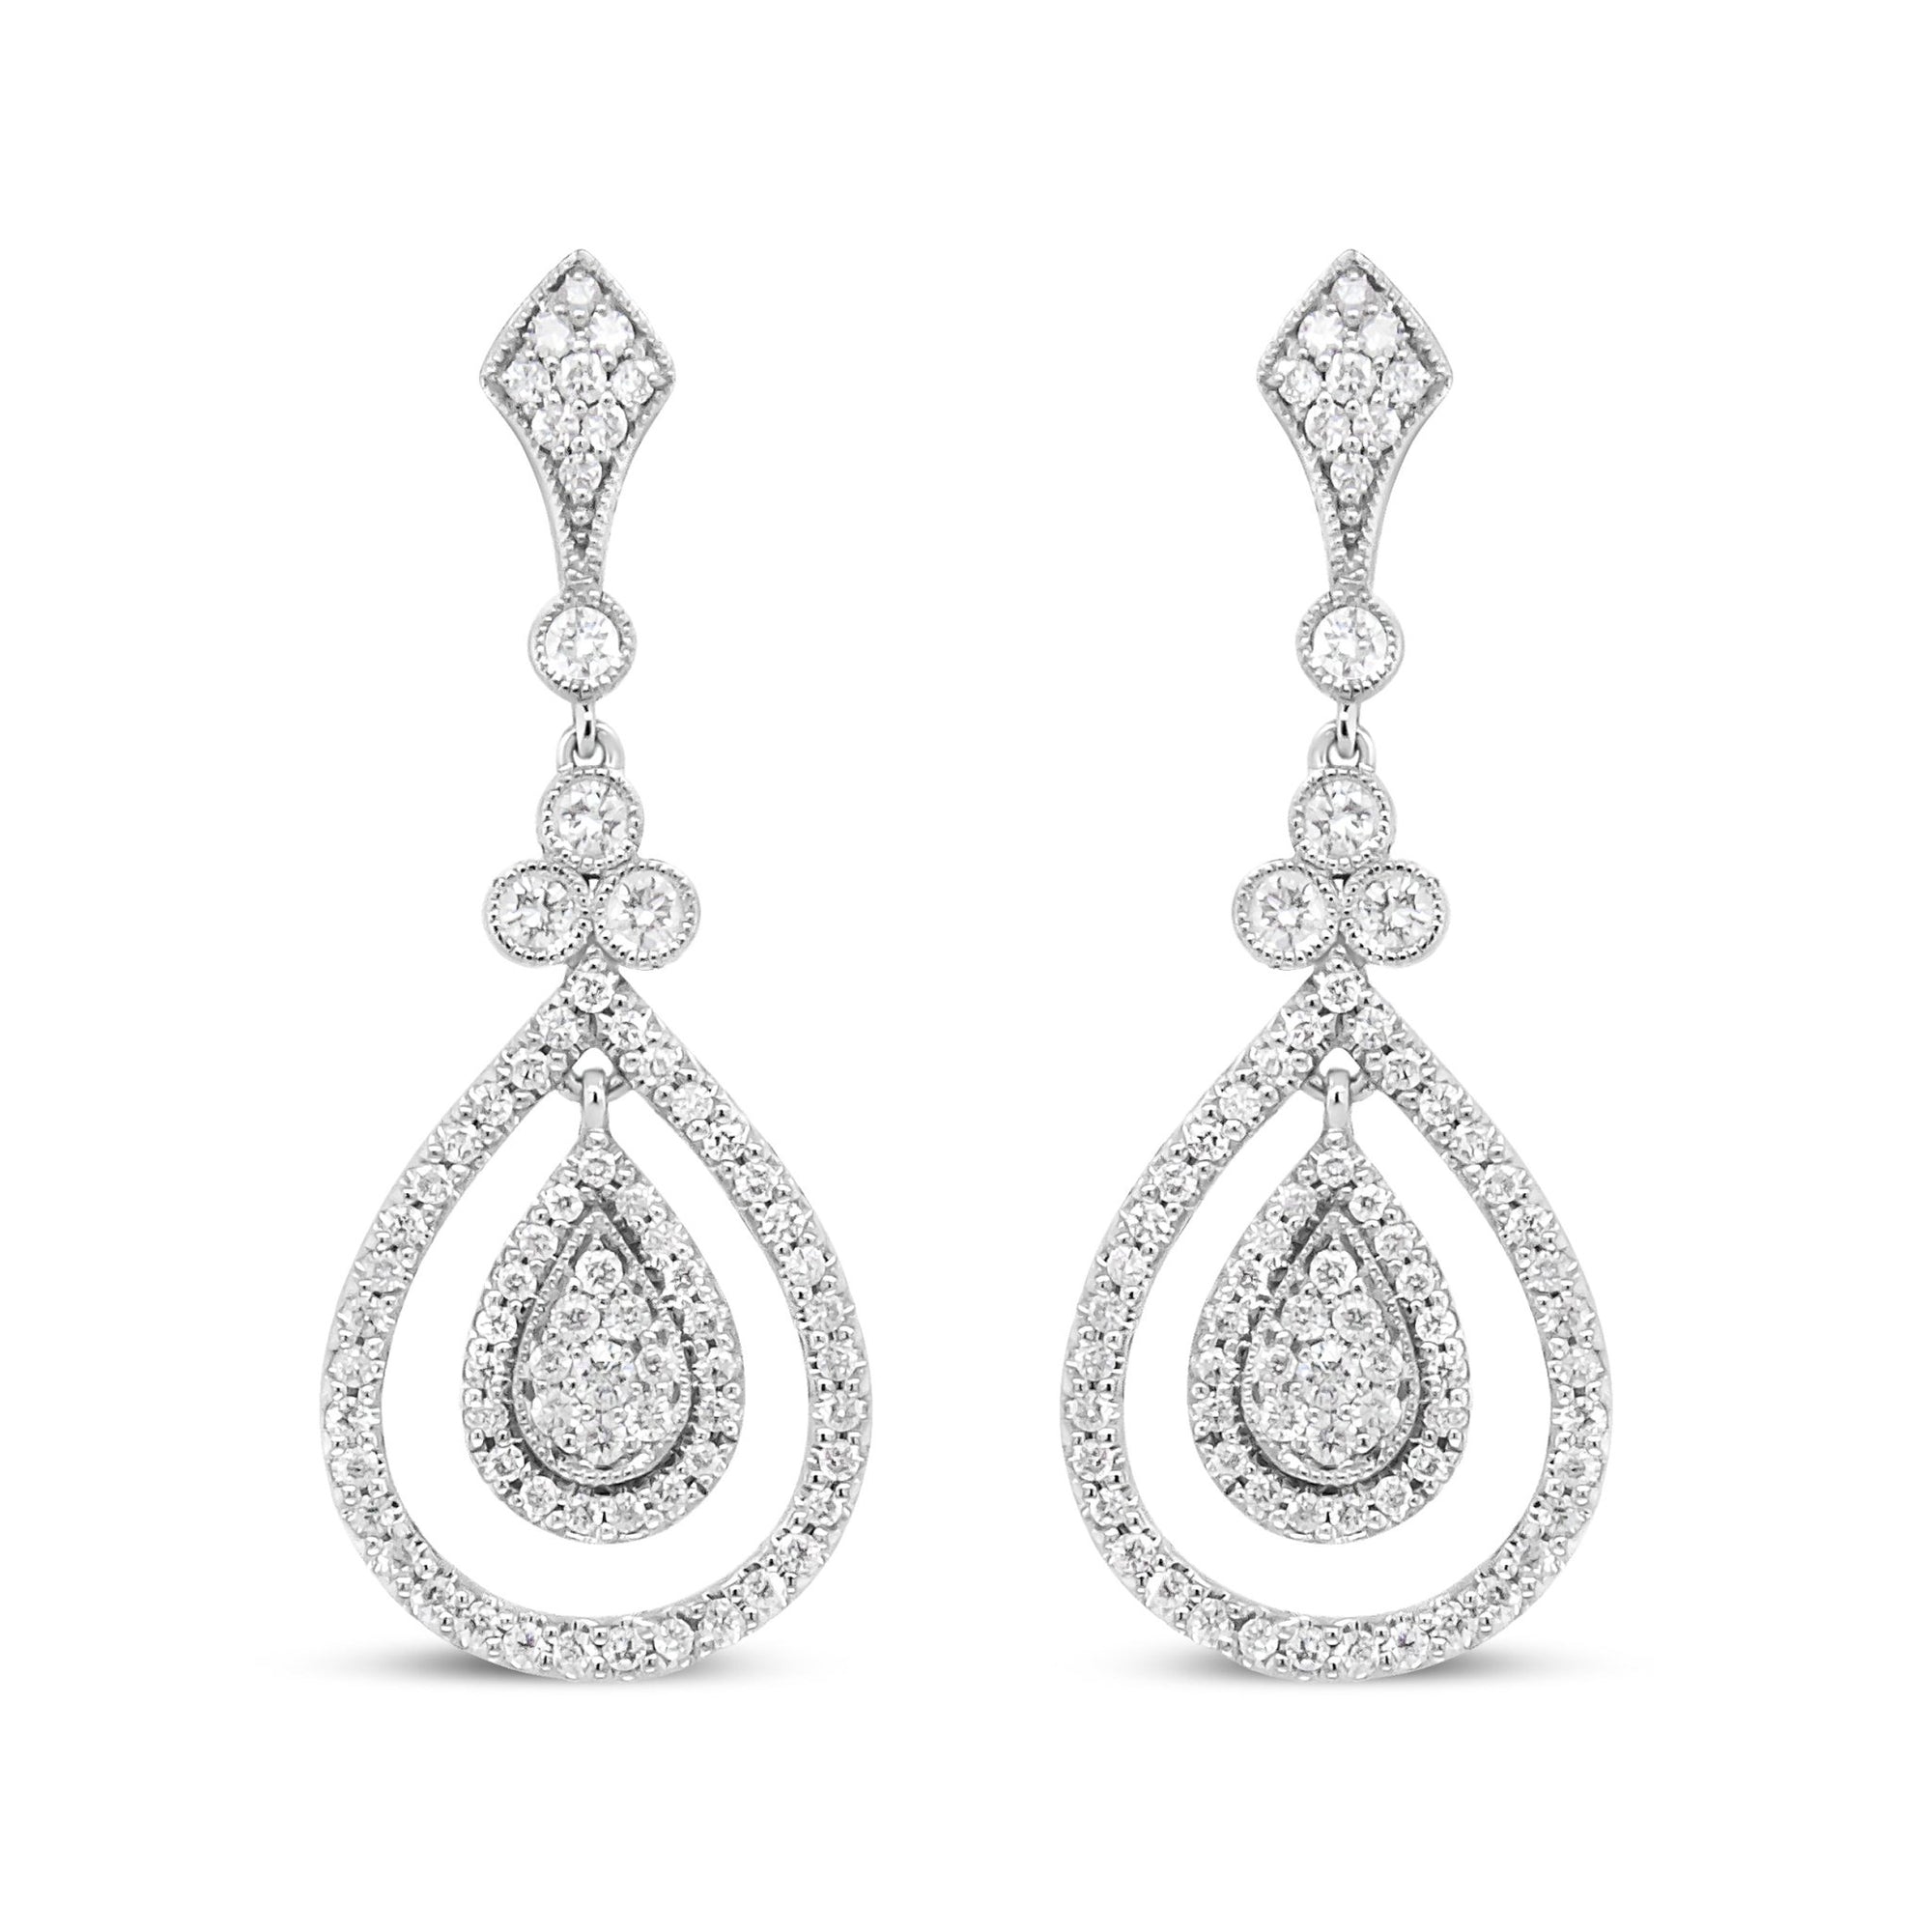 18K White Gold 1 1/4 Cttw Round Diamond Openwork Teardrop-Shaped Dangle Earrings (F-G Color, VS1-VS2 Clarity) - LinkagejewelrydesignLinkagejewelrydesign